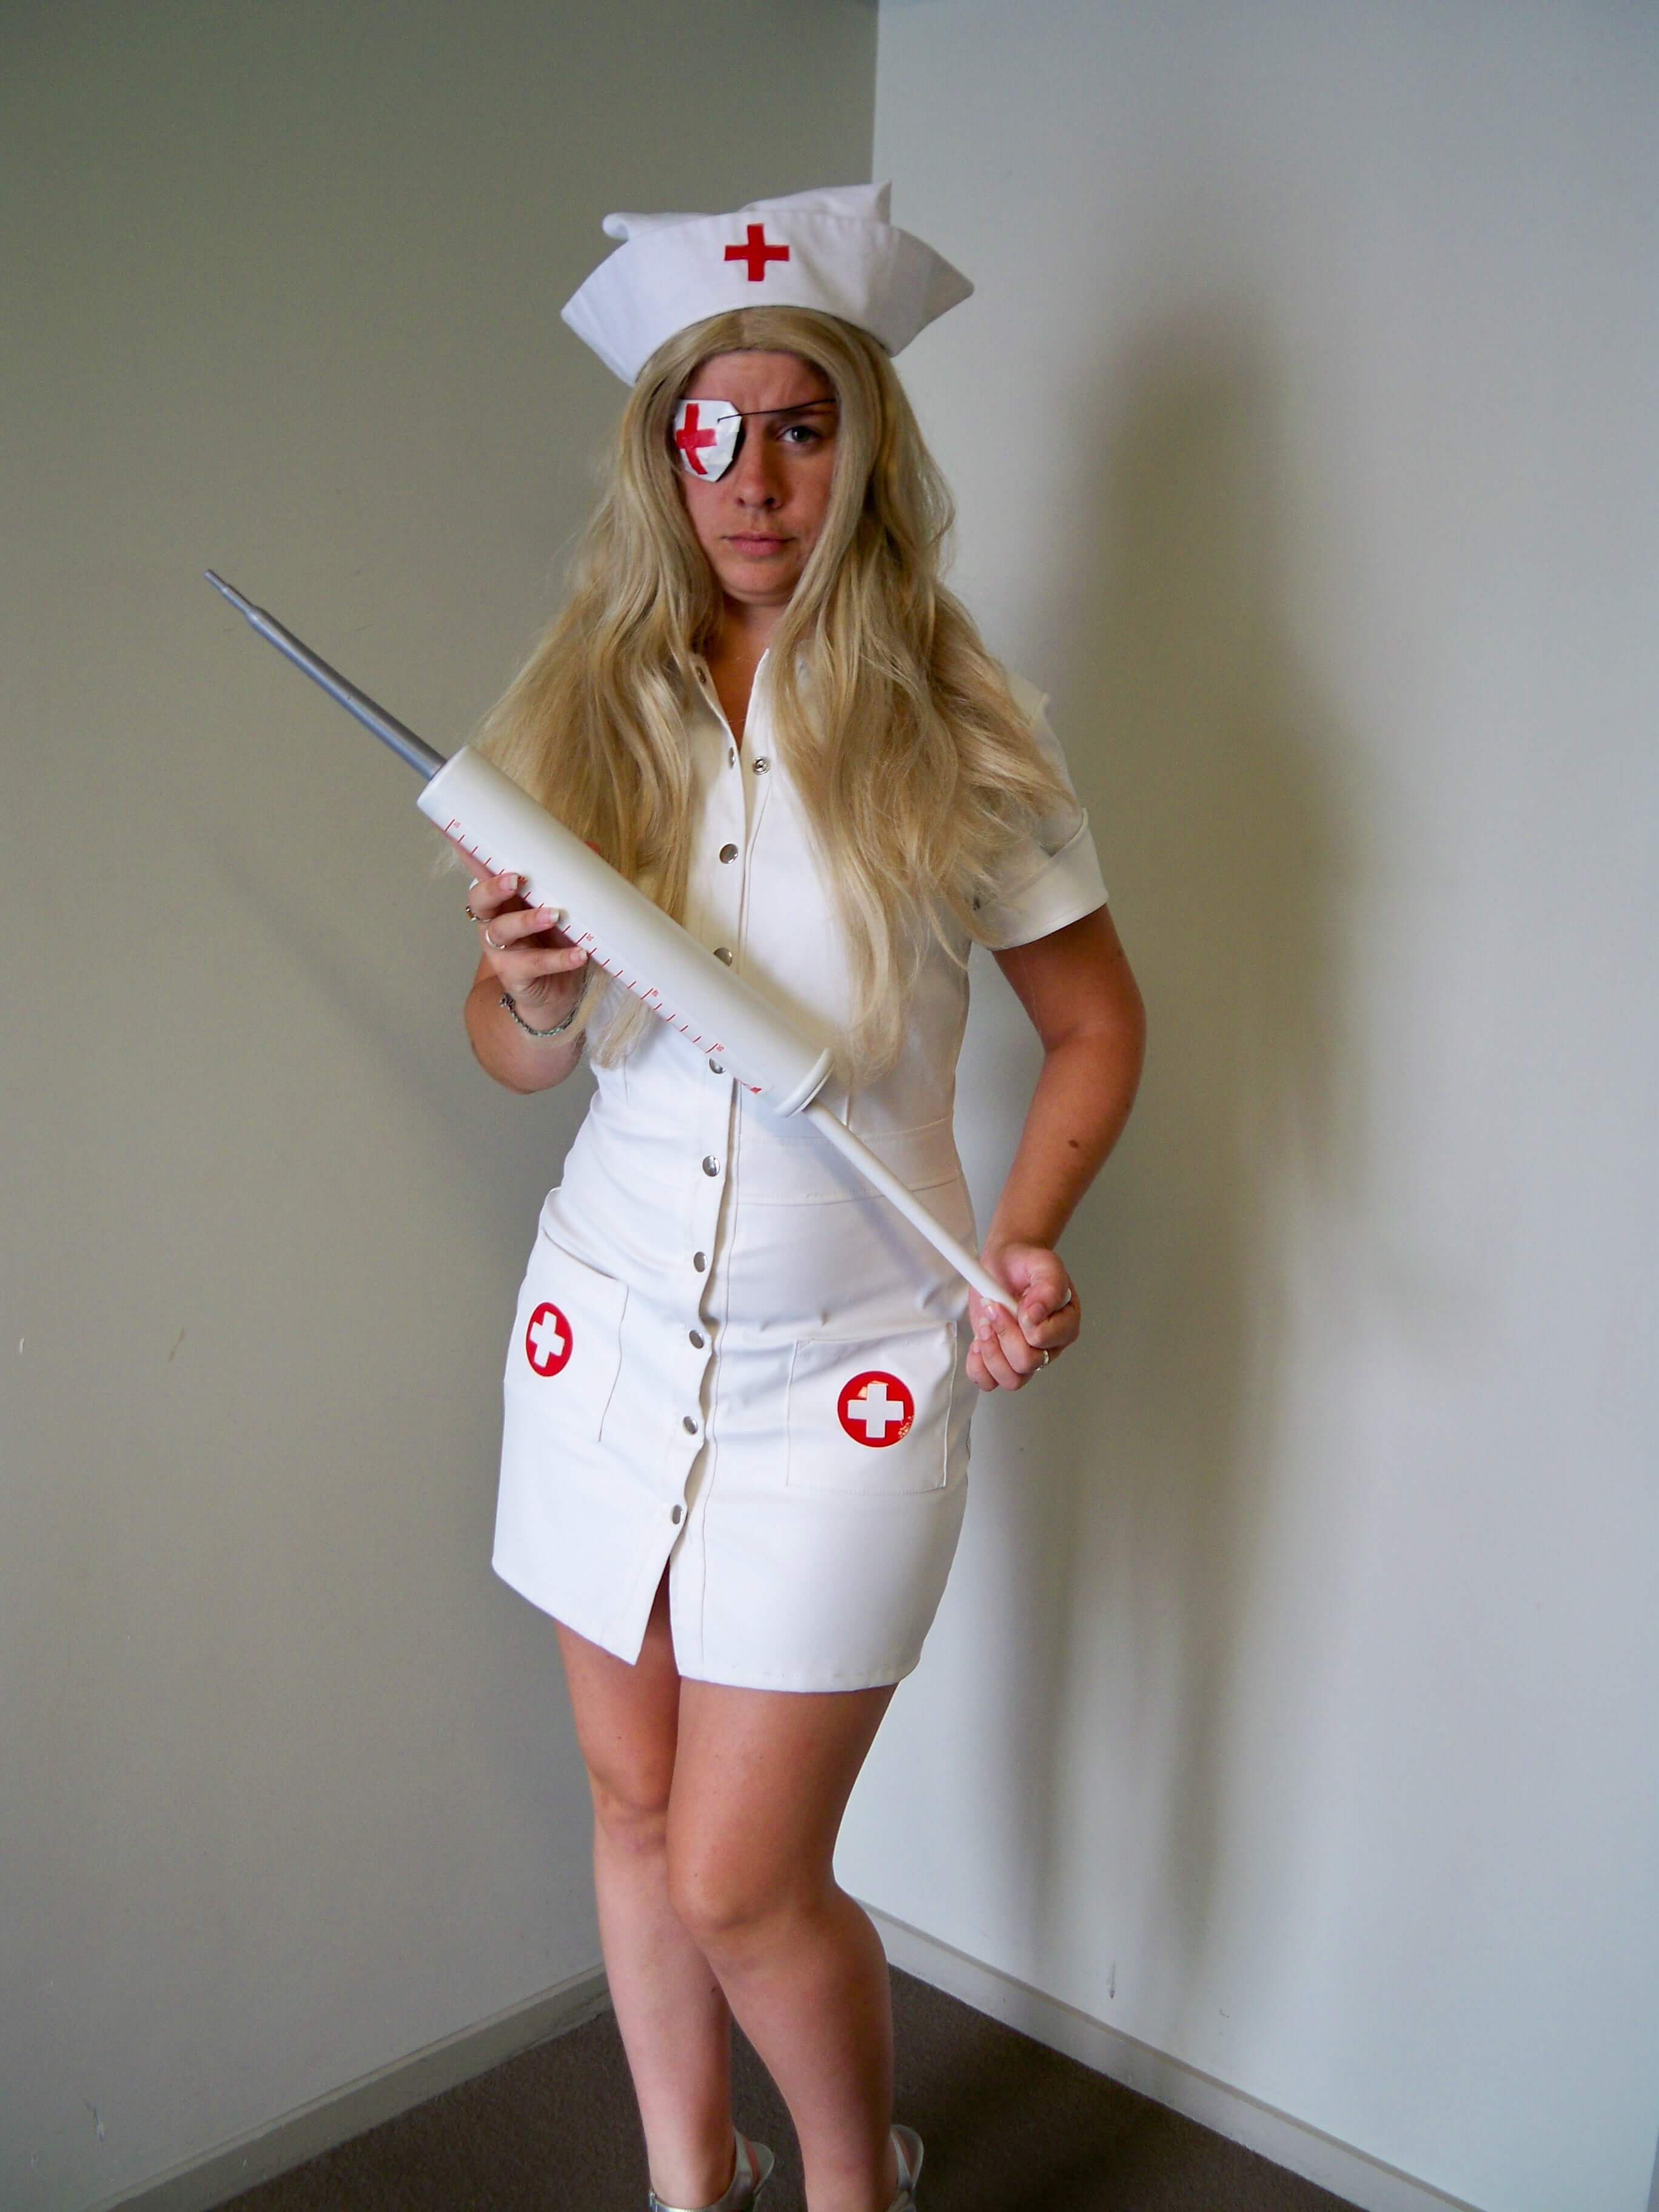 Elle Driver - Kill Bill - Totally frocked. elle driver nurse costume. 